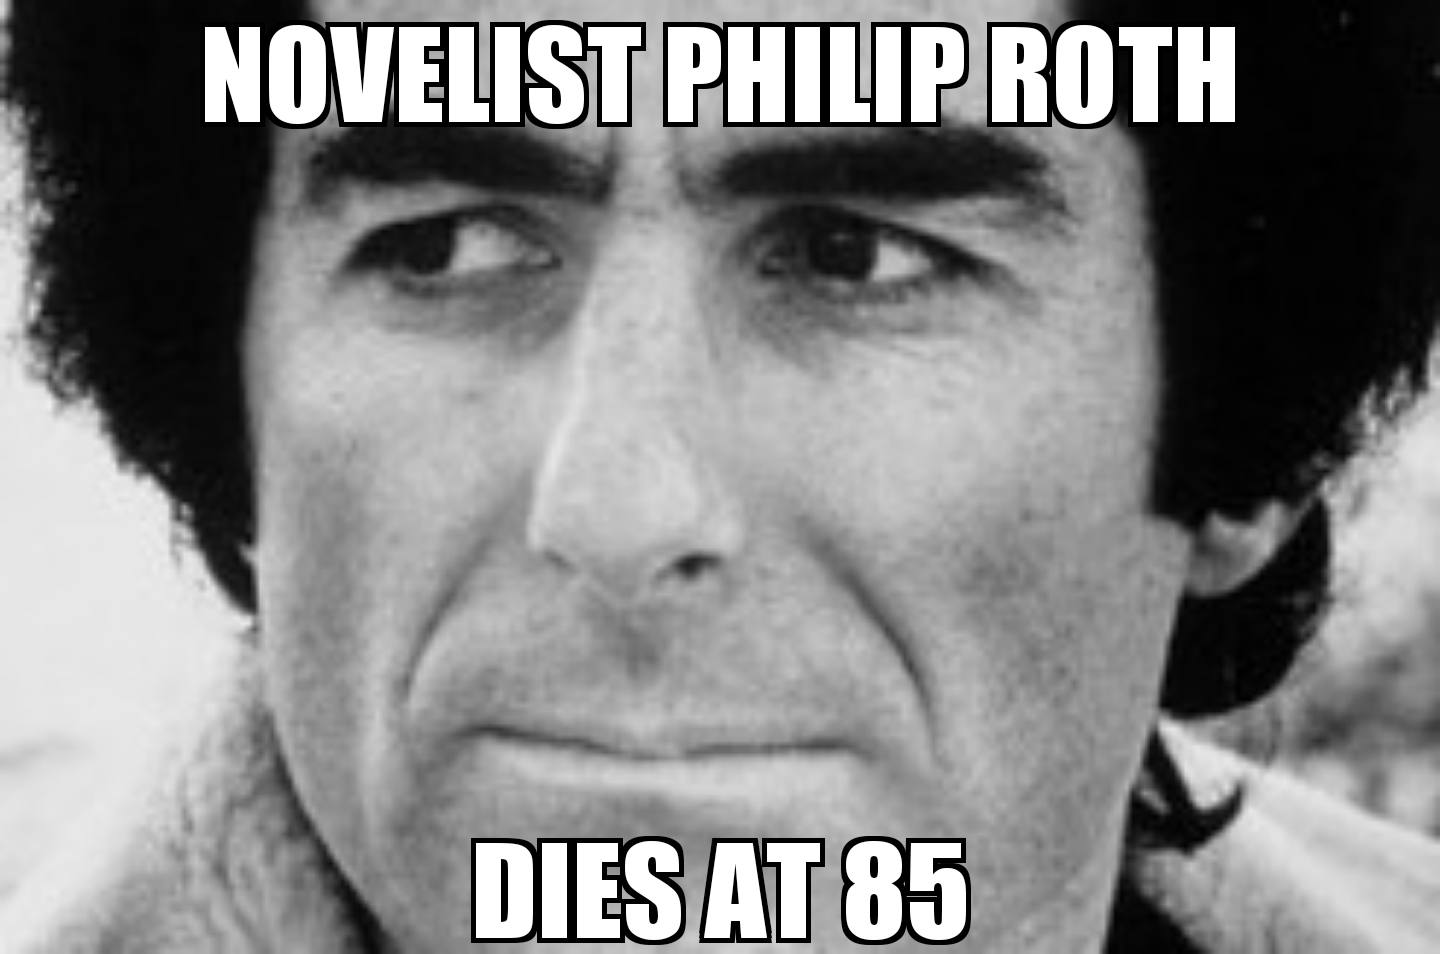 Philip Roth dies